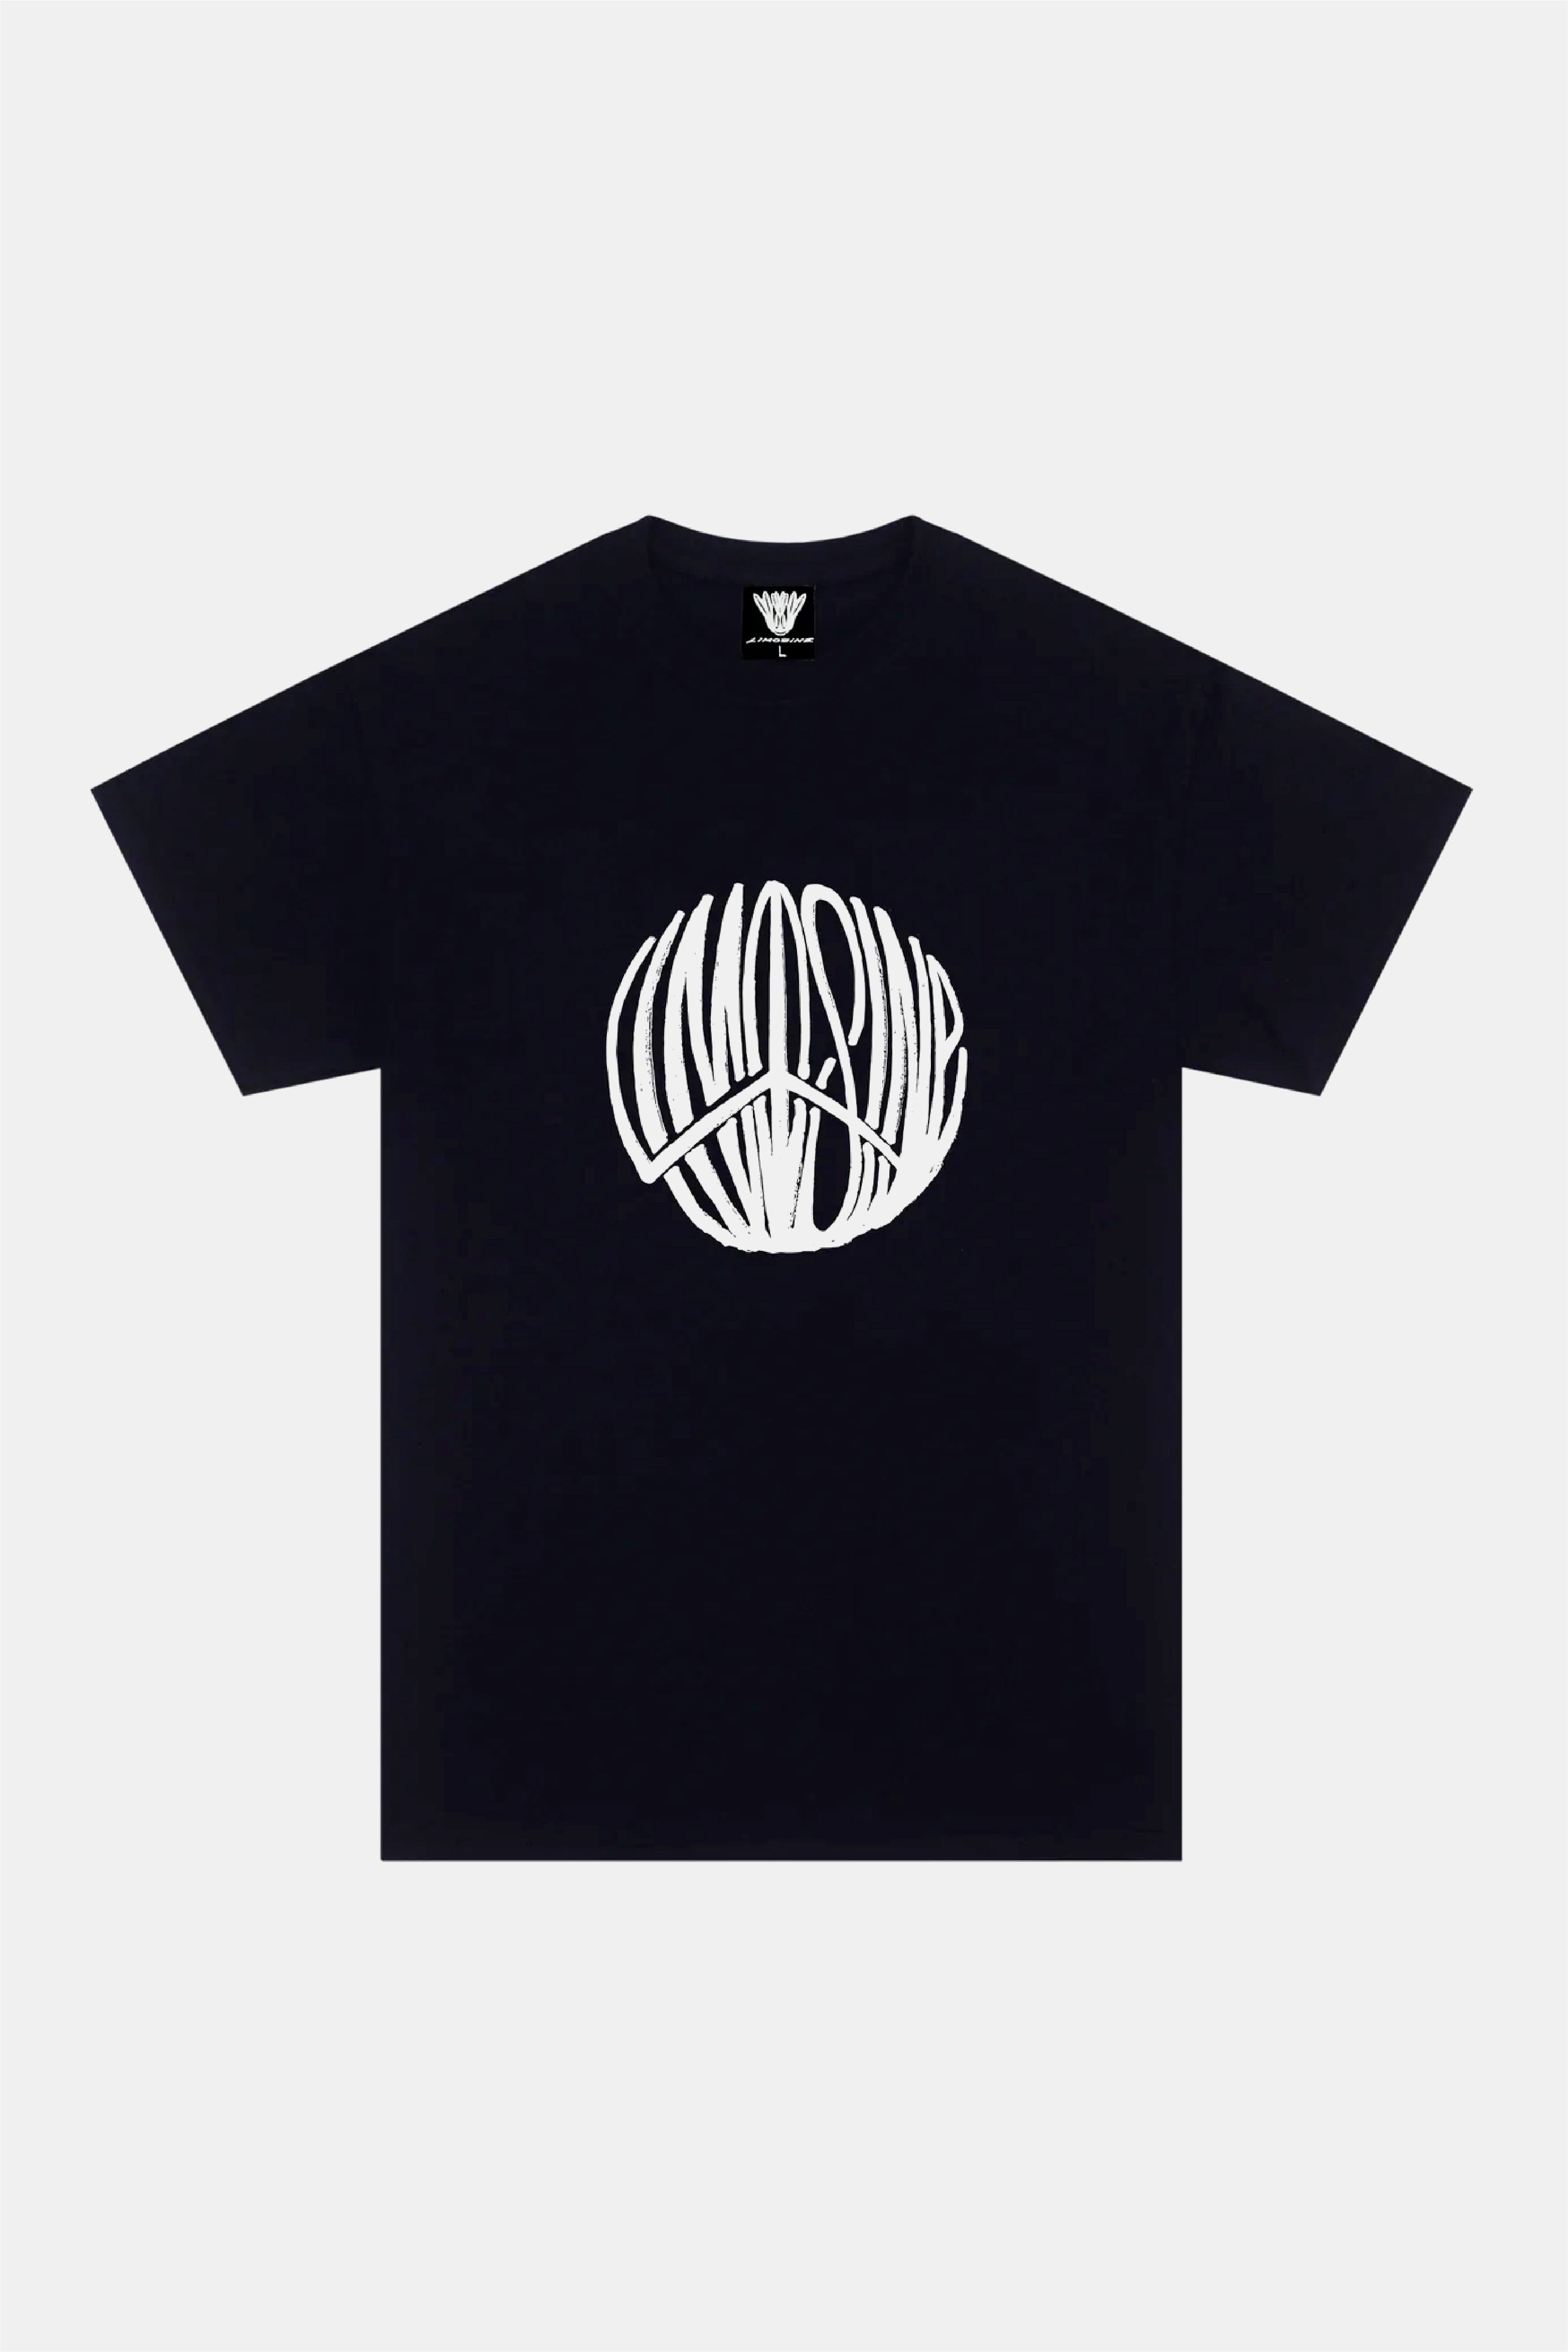 Selectshop FRAME - LIMOSINE Peace Tee T-Shirts Dubai